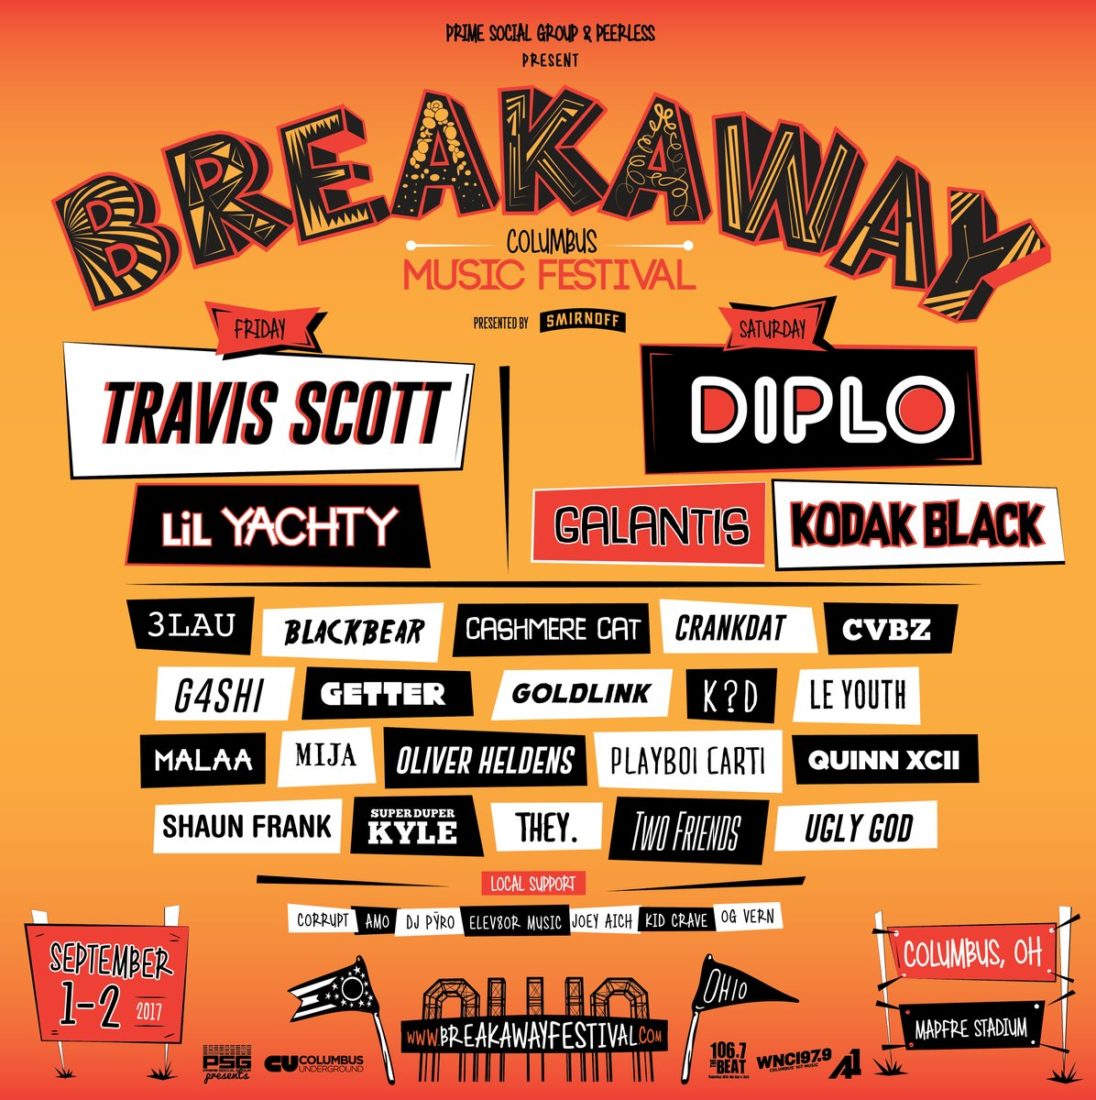 breakaway music festival 2021 lineup north carolina